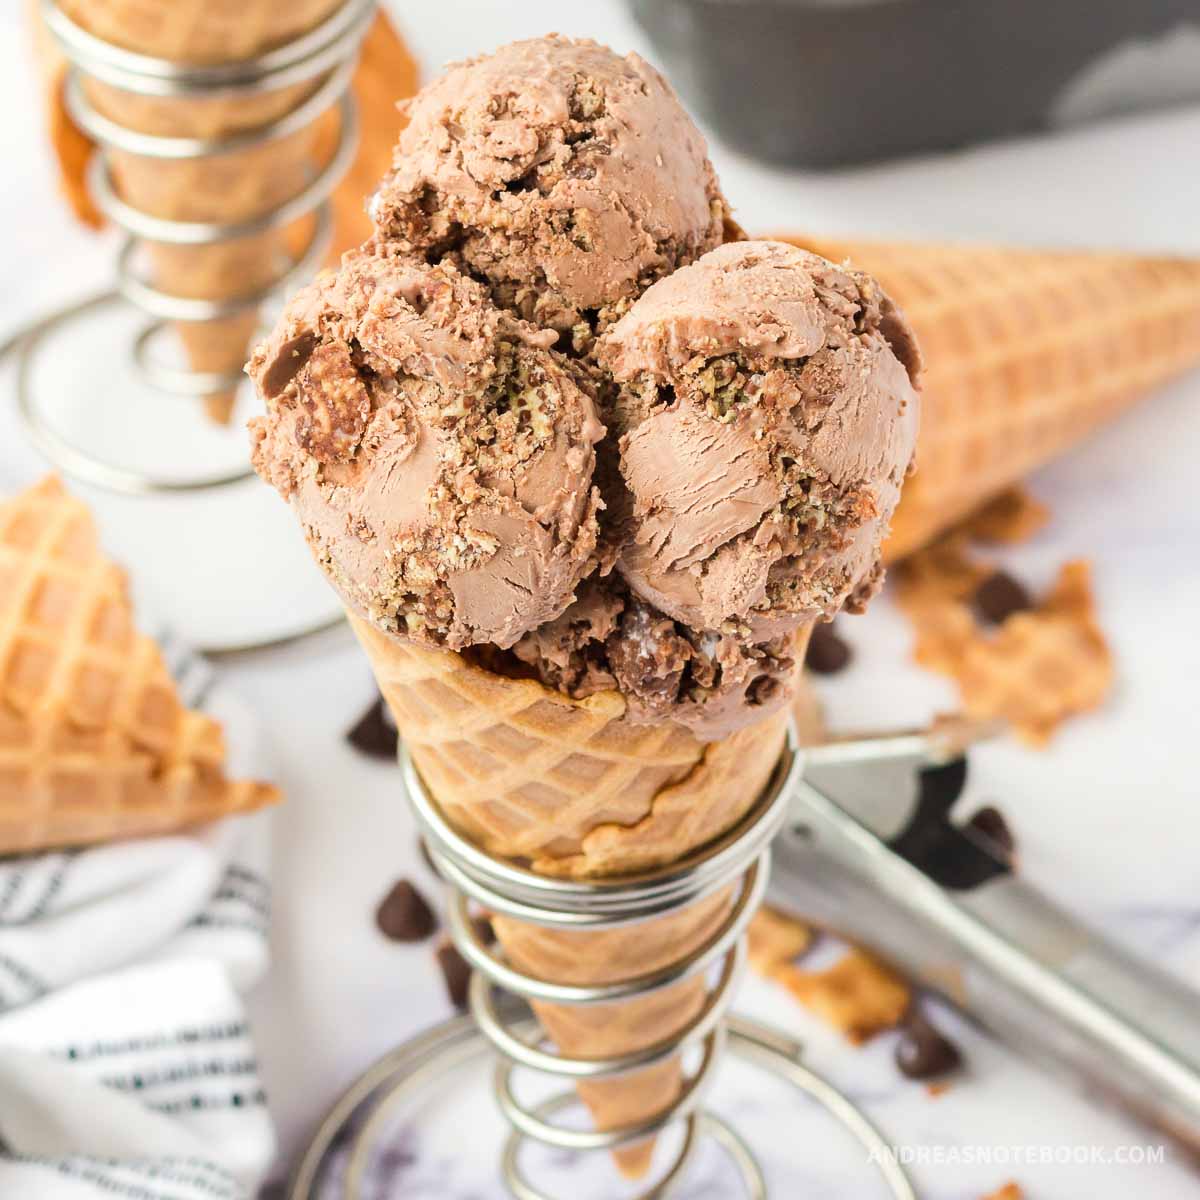 Triple scoop of muddy buddy ice cream on an ice cream cone.